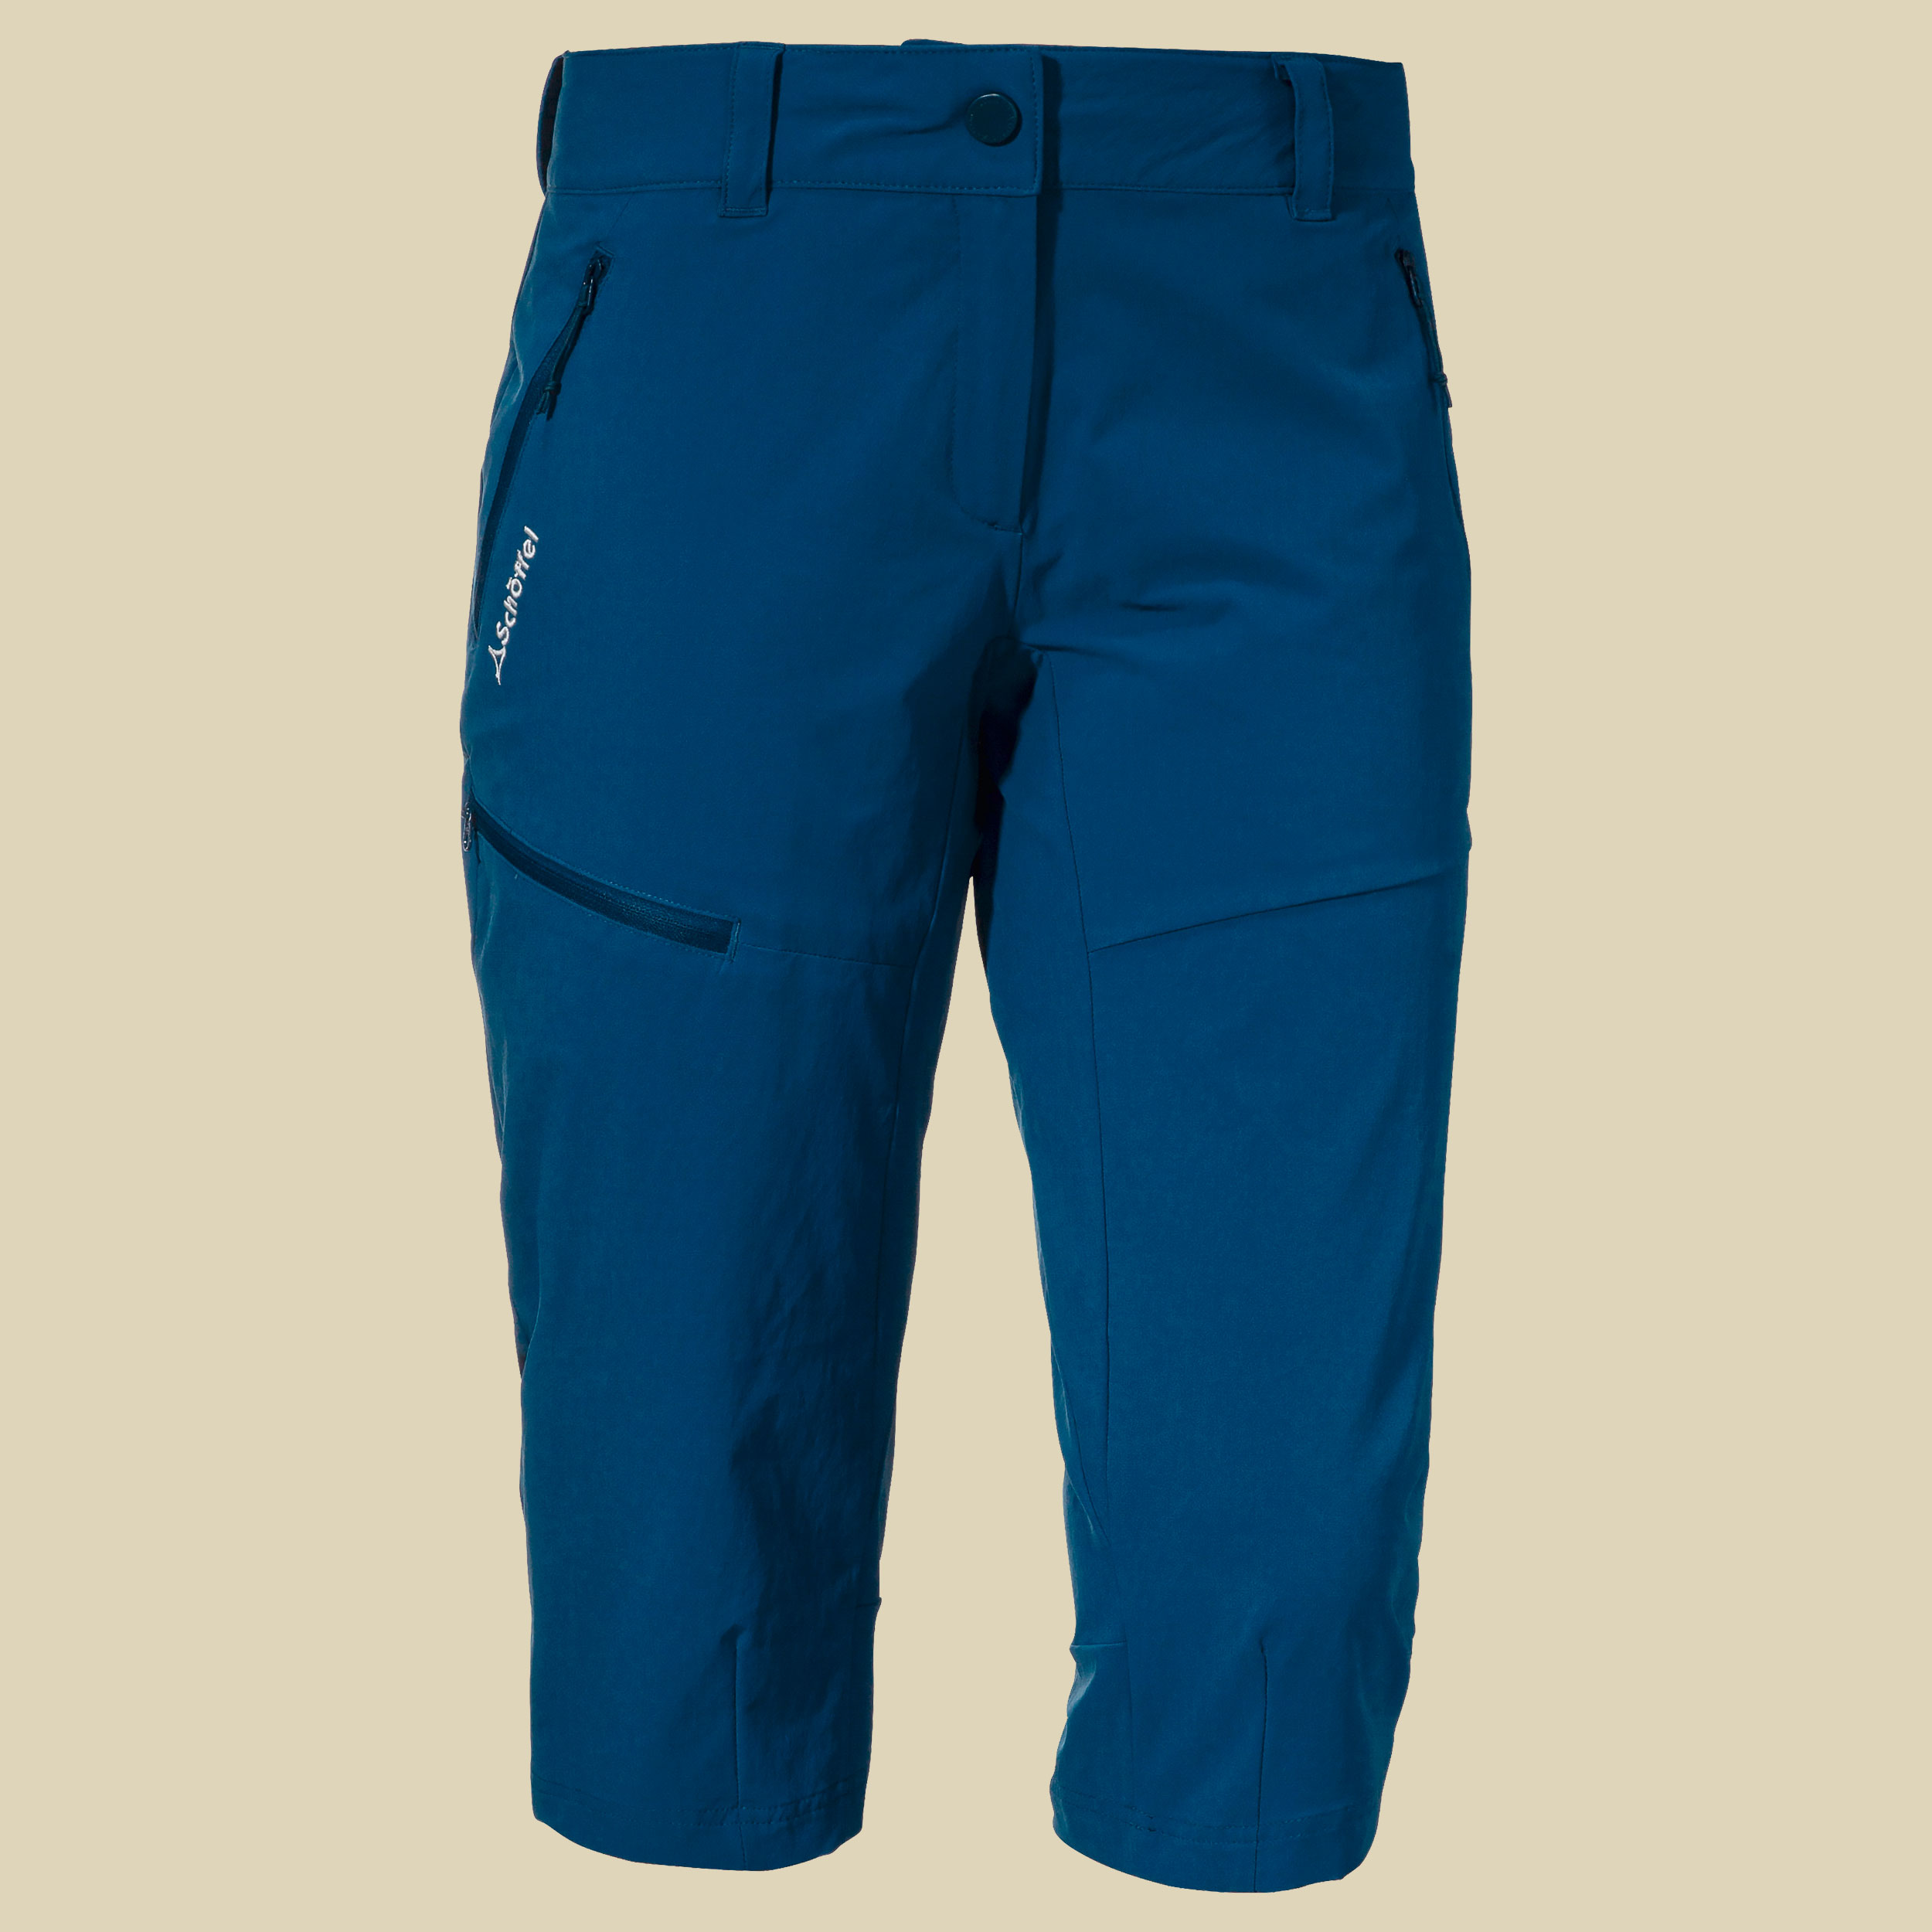 Pants Caracas2 Women Größe 36 Farbe lakemount blue